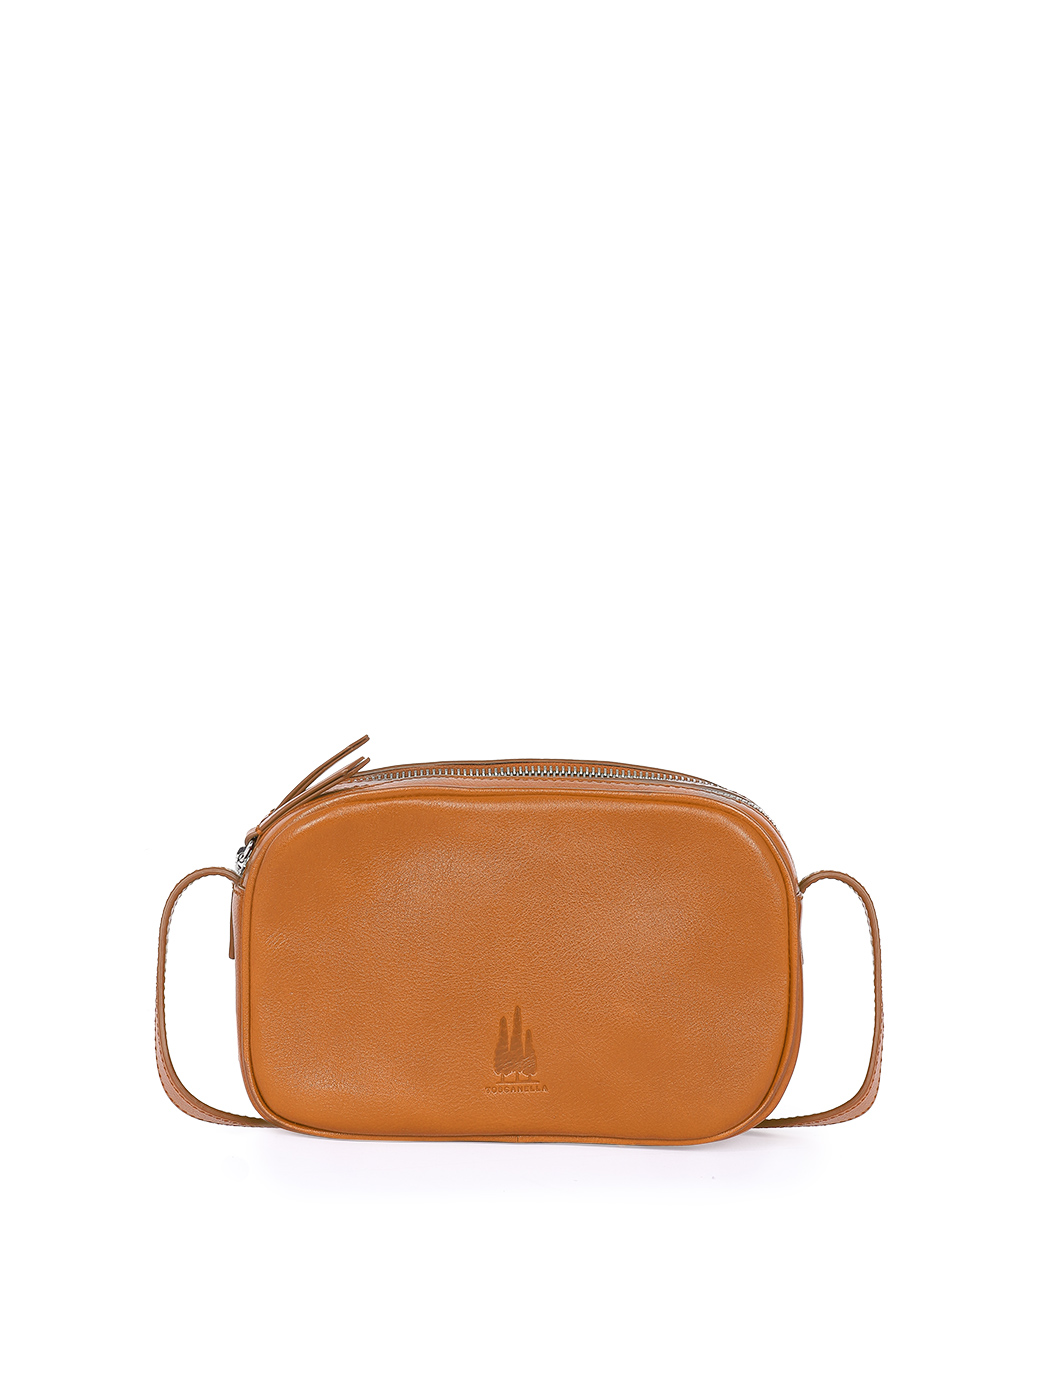 Buy Tan Leather Small Crossbody Bag Rectangular for Women. Shoulder Bag  Vintage. All Season Handbag Purse Phone Bag Gift Sustainable Fashion Online  in India - Etsy